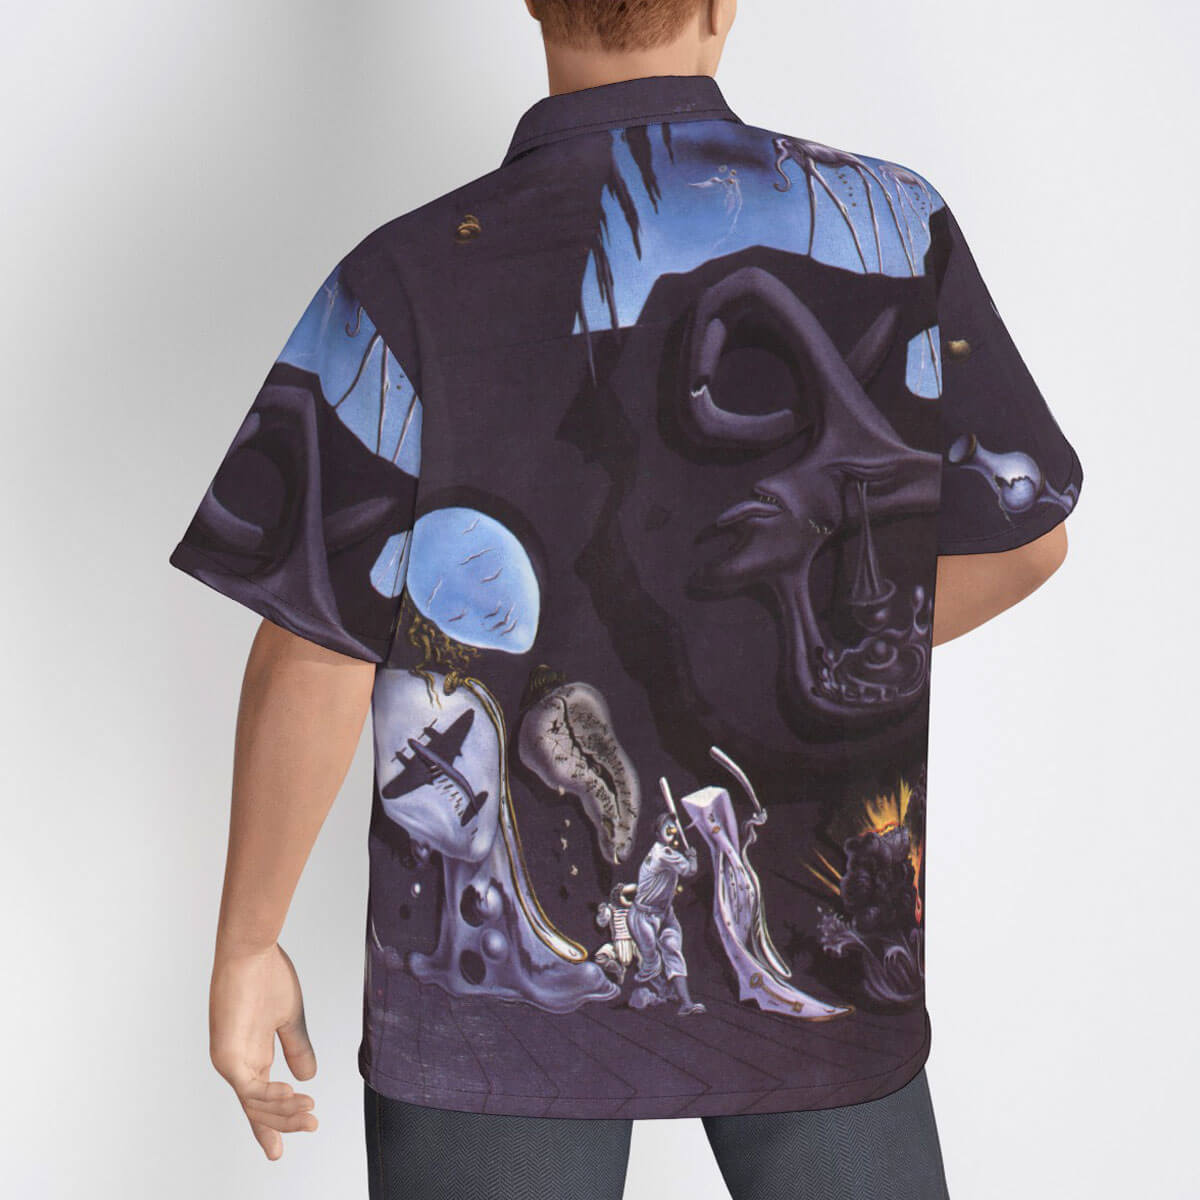 Back of Hawaiian shirt showcasing Dali's atomic period artwork